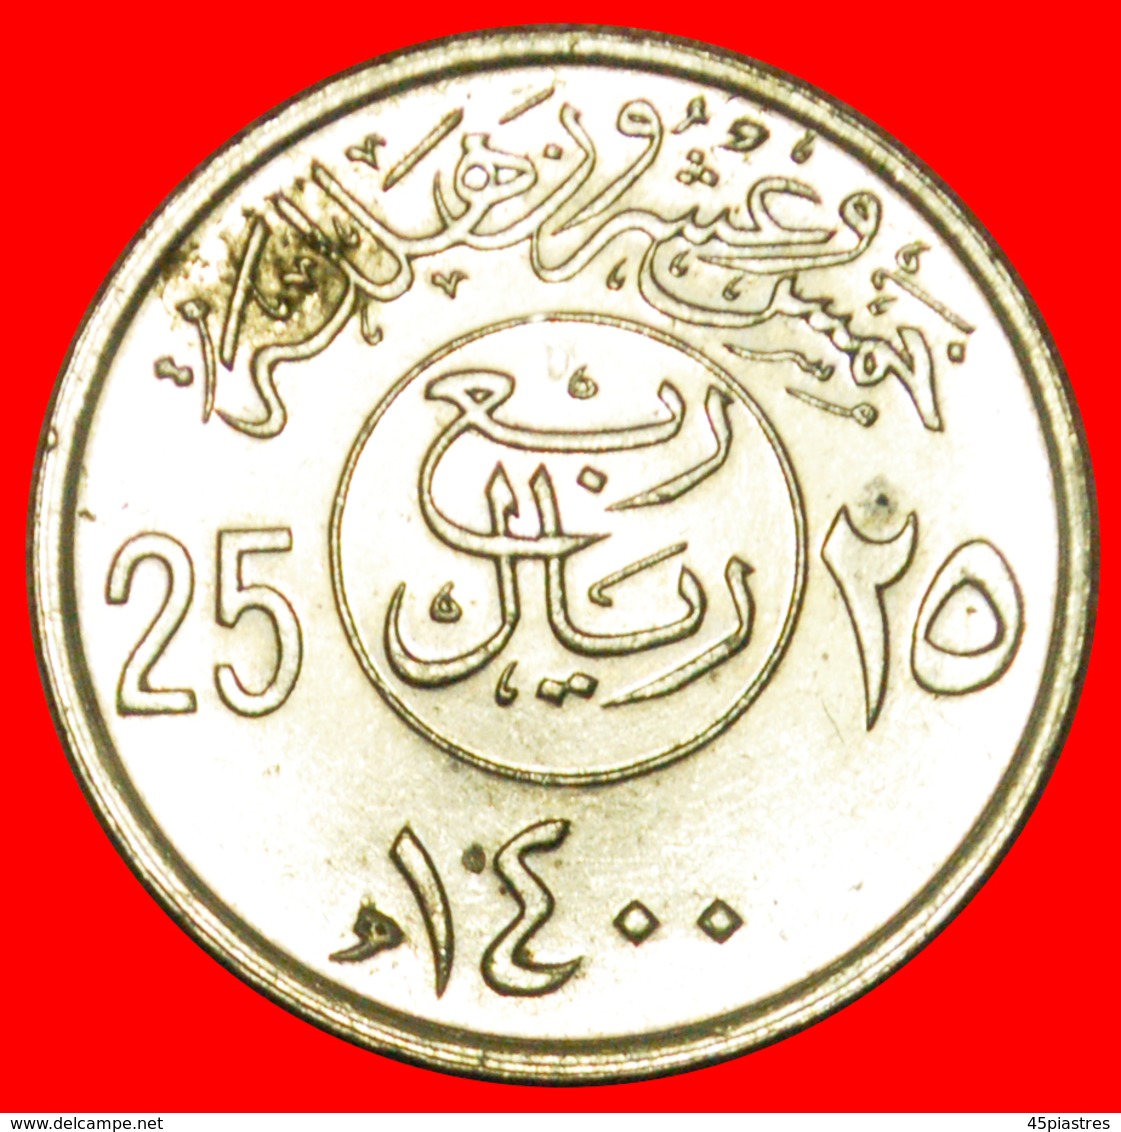 # DAGGERS AND PALMTREE: SAUDI ARABIA ★ 25 HALALA / 1/4  RIYAL 1400 (1980) MINT LUSTER! LOW START ★ NO RESERVE! - Arabie Saoudite